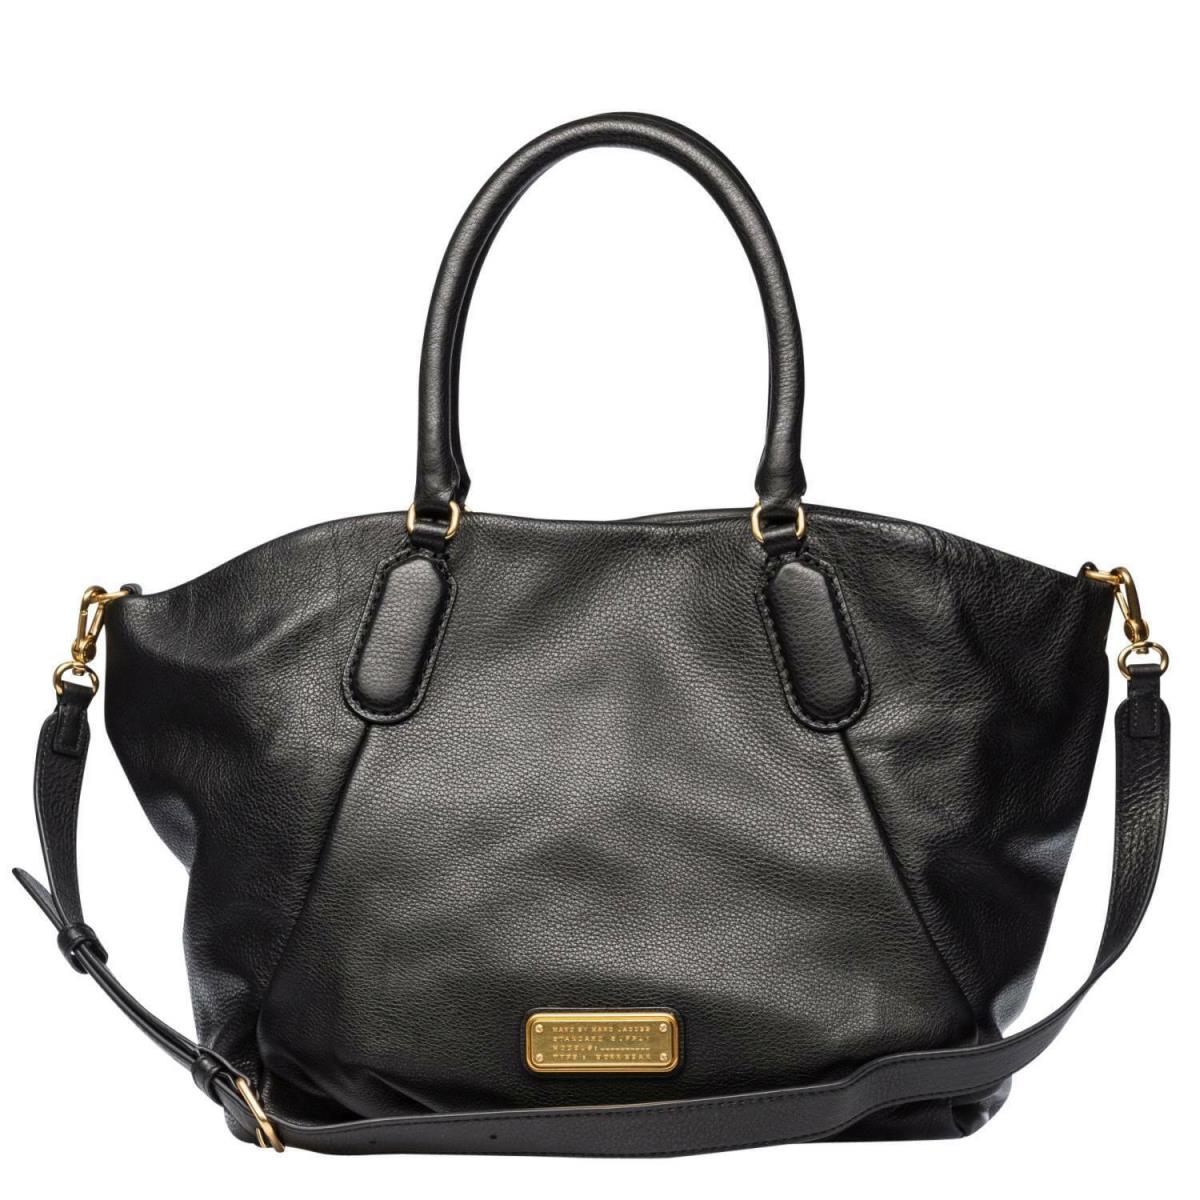 Marc Jacobs Q Fran Black Italian Leather Shoulder Tote Bag Purse